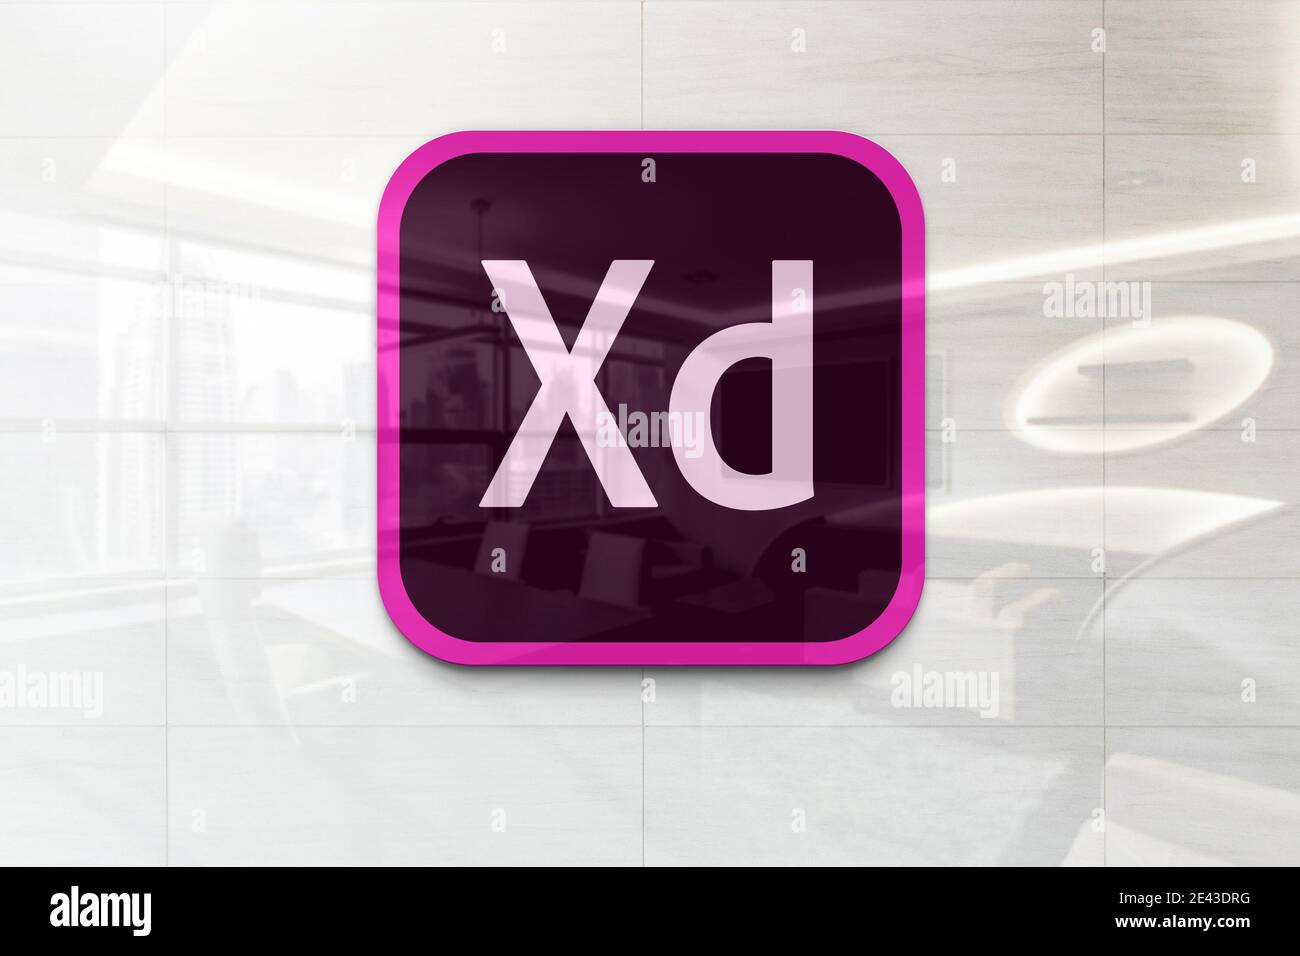 adobe xd logo on reflective business wall plaque Stock Photo - Alamy